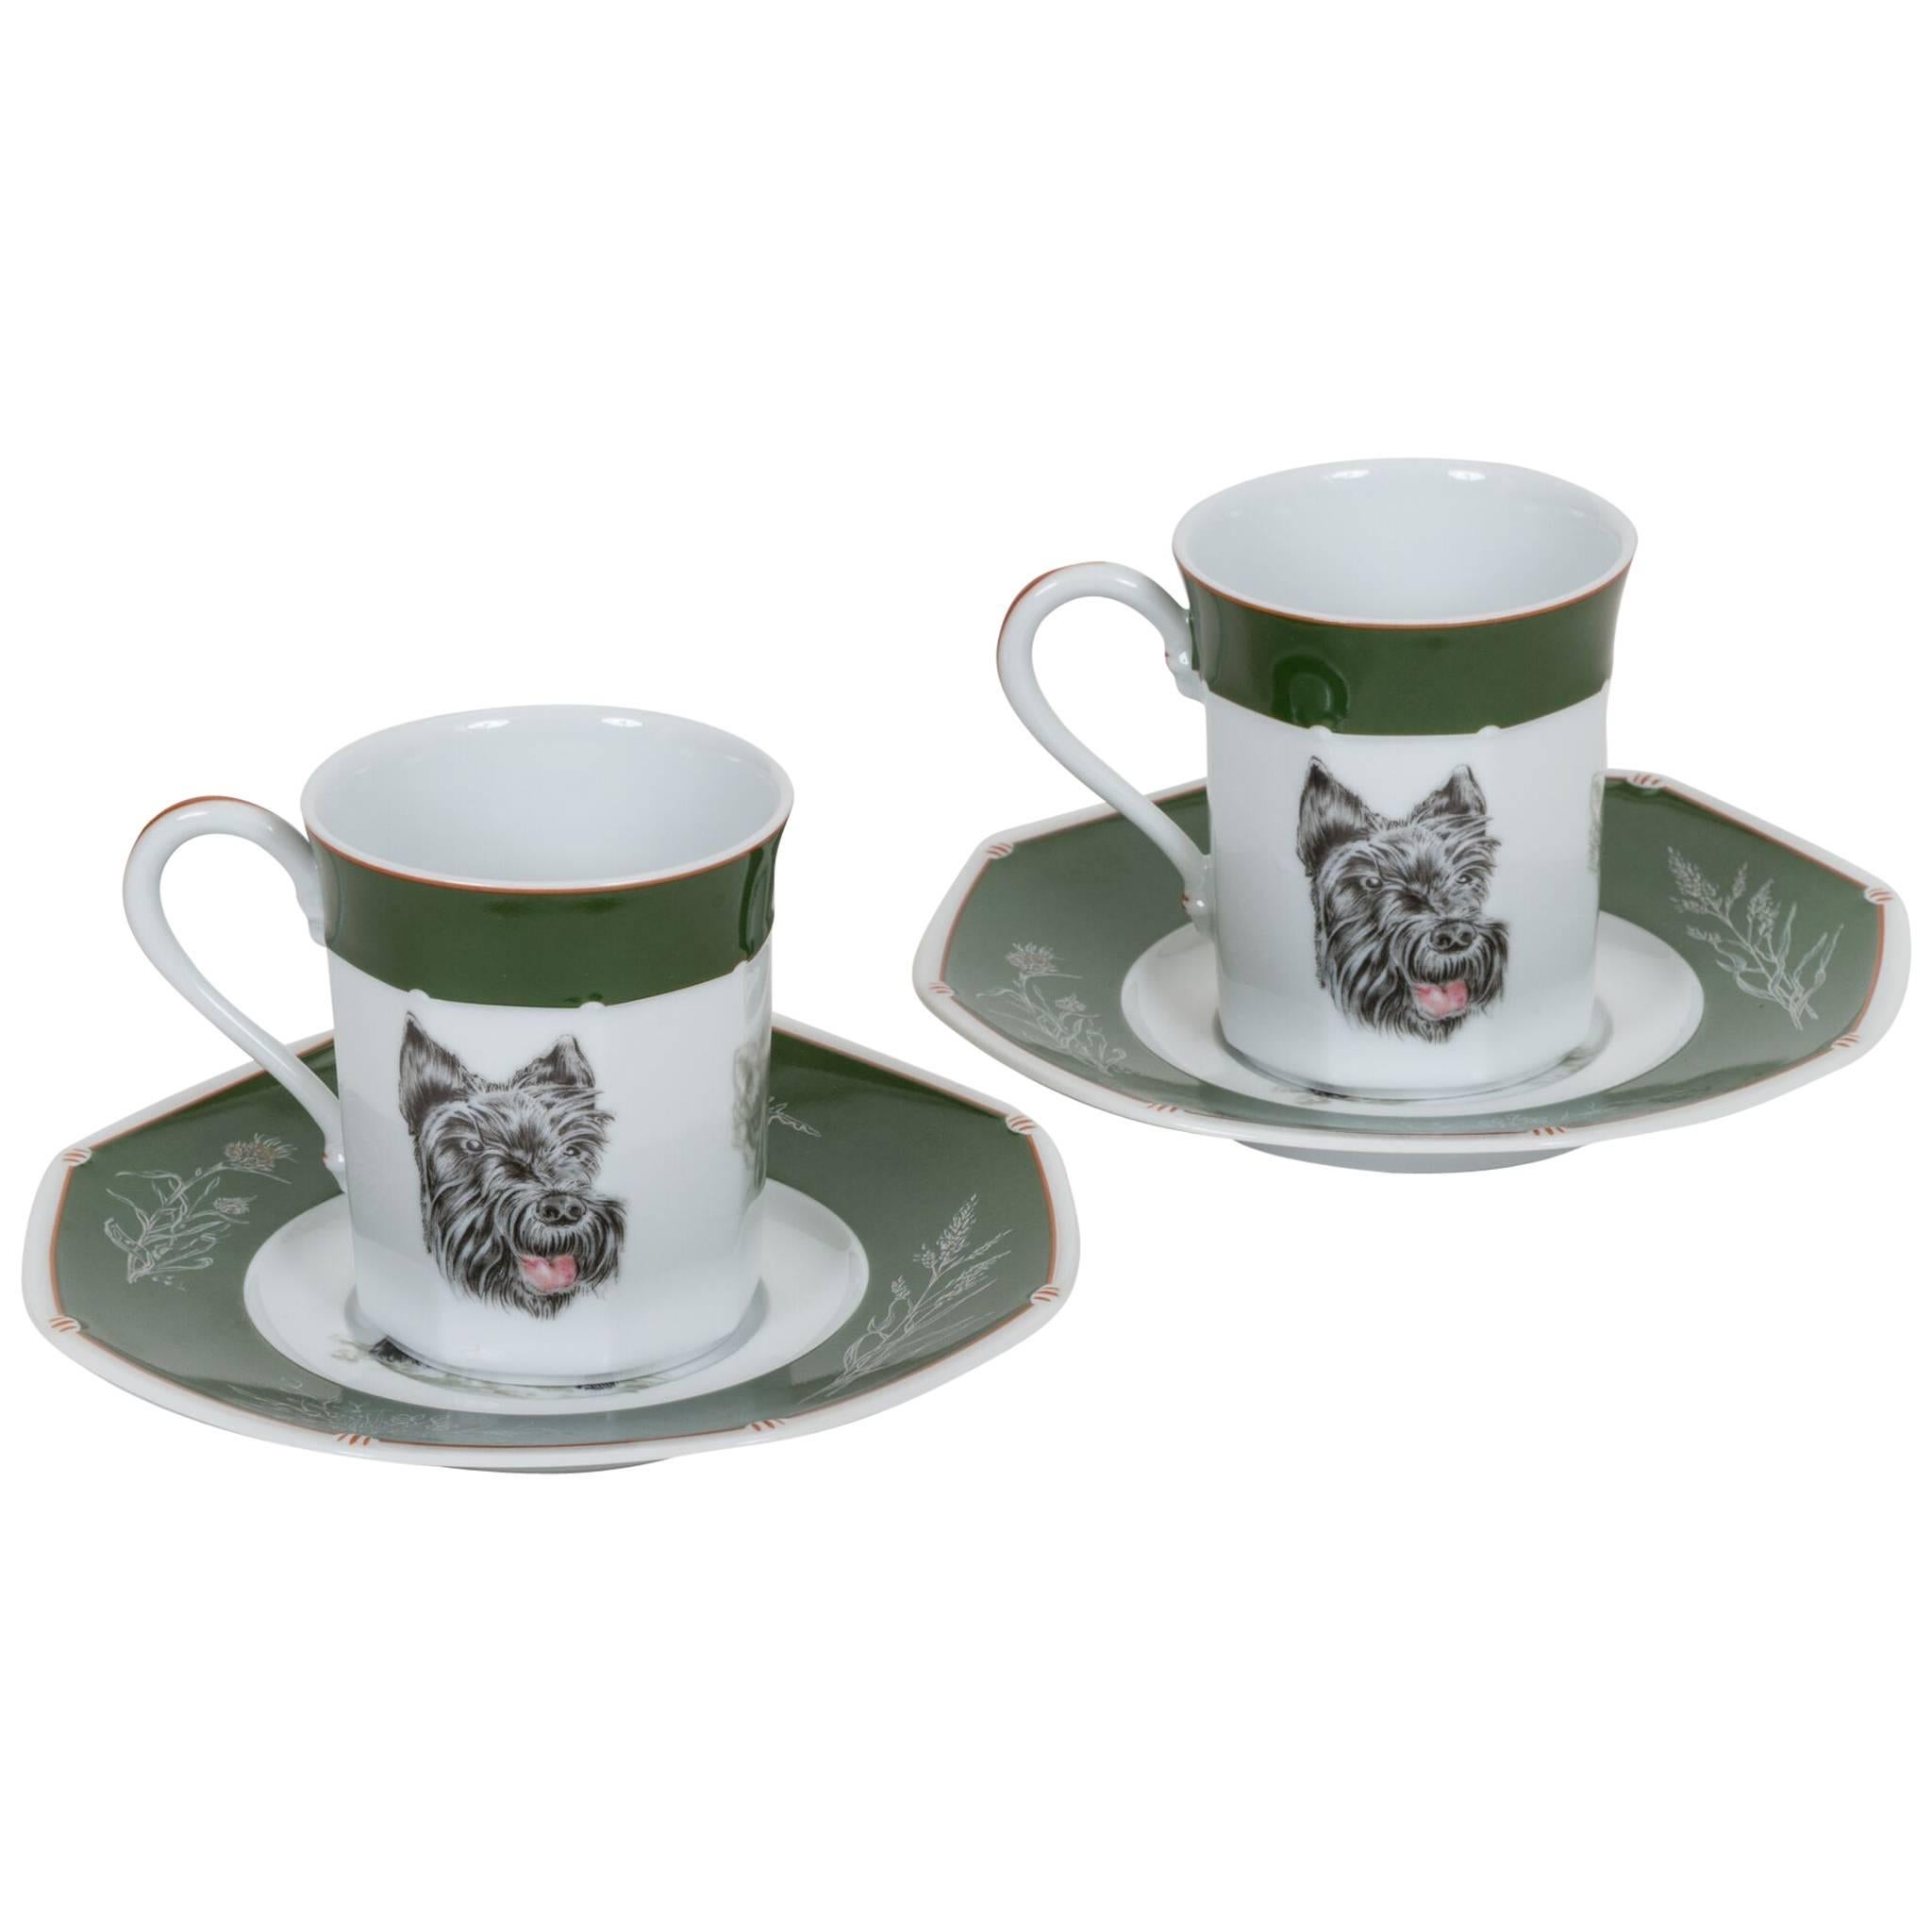 Hermès Scottish Terrier Teacups, S/2